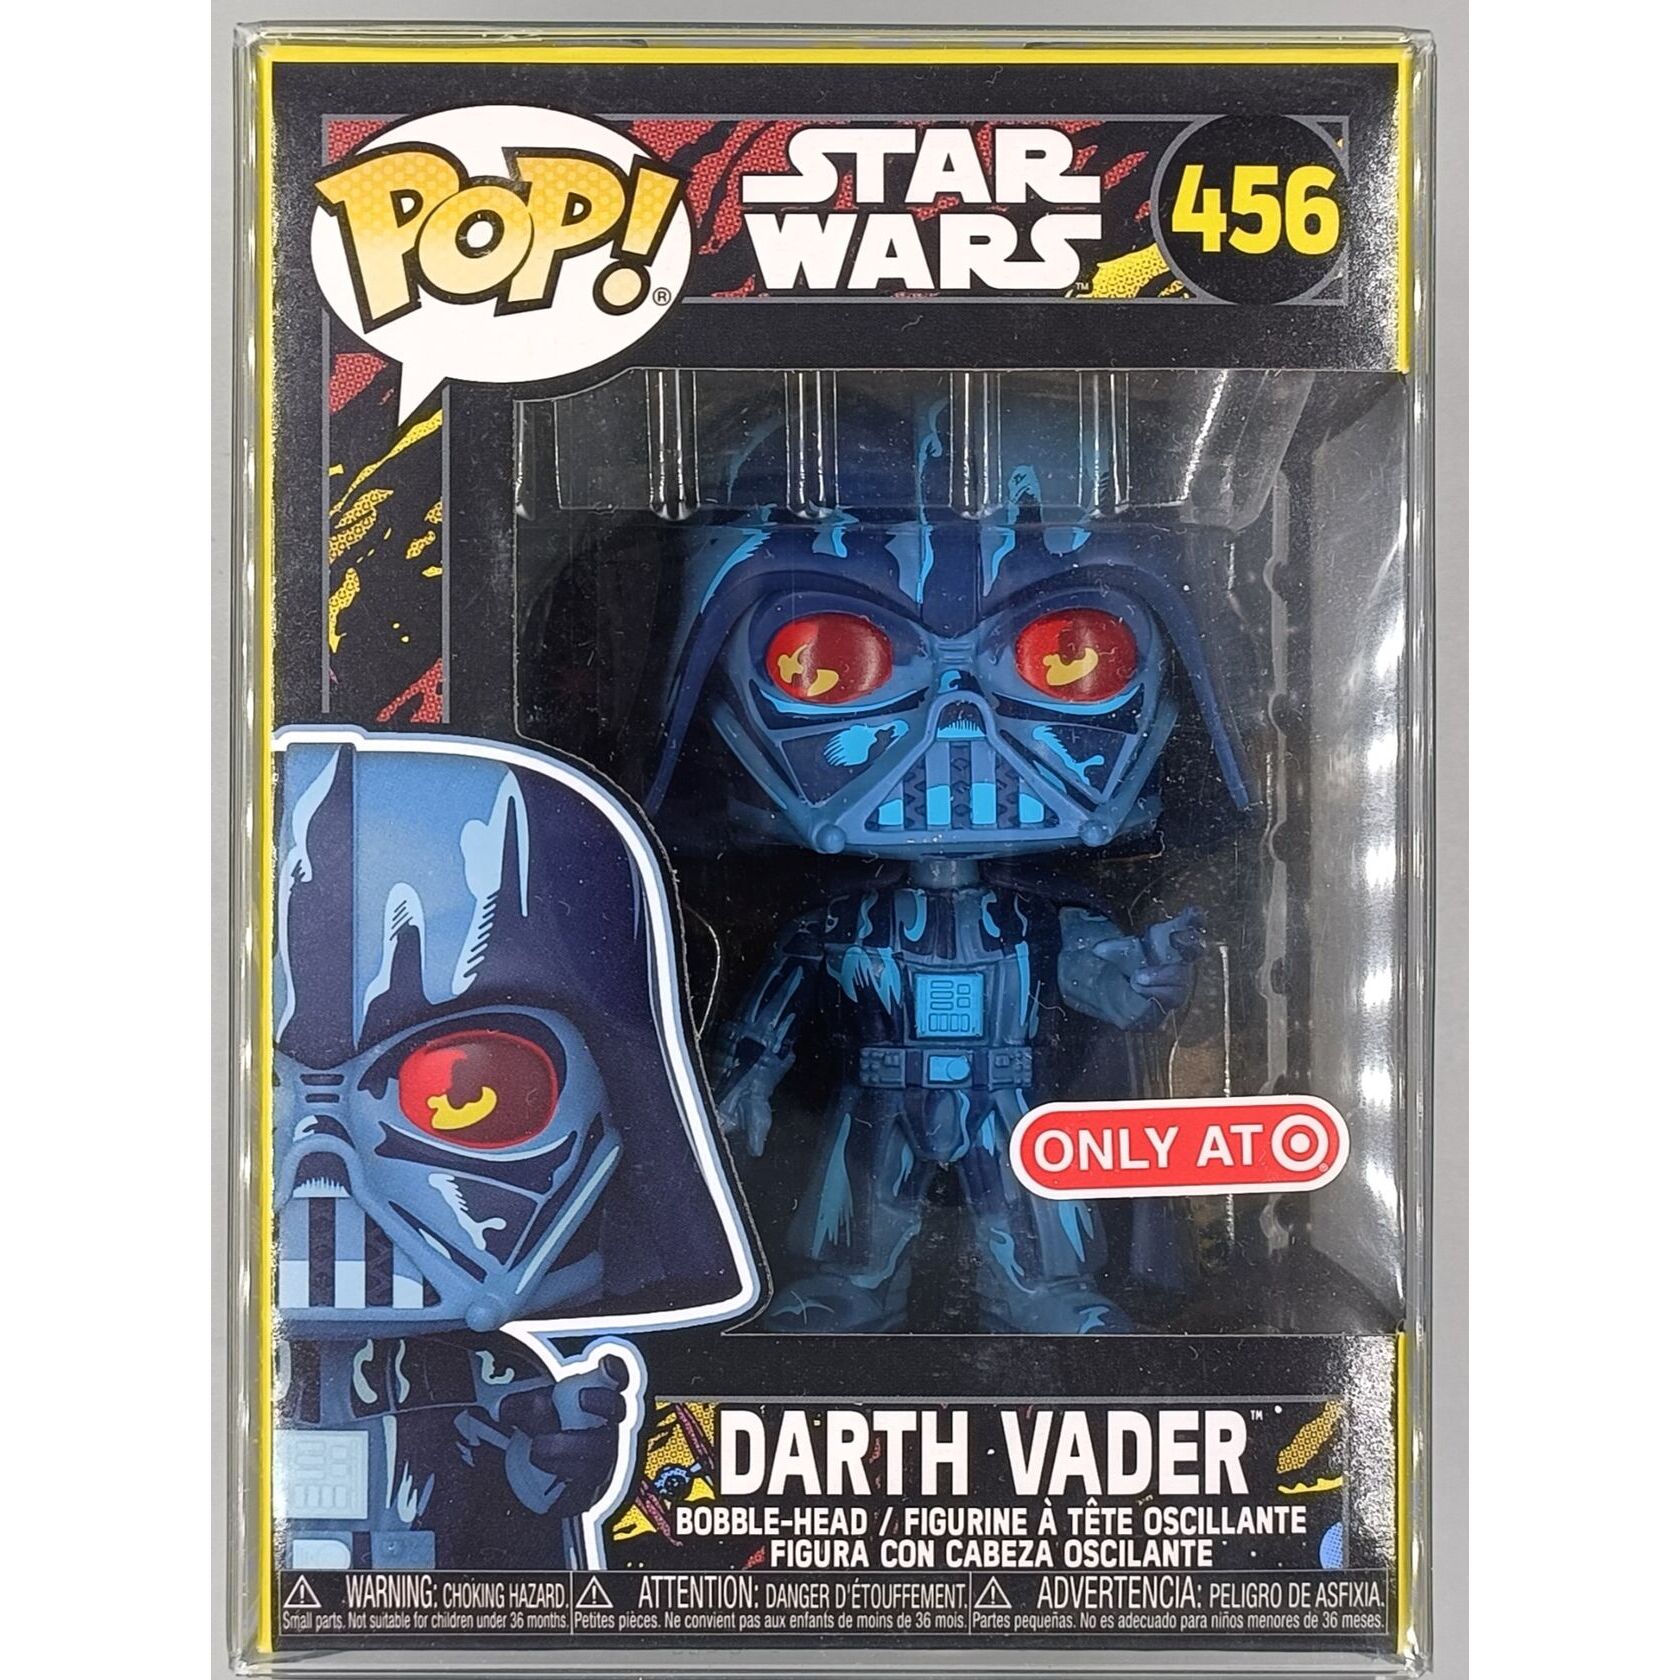 Darth Vader Retro Series - POP! Star Wars action figure 456